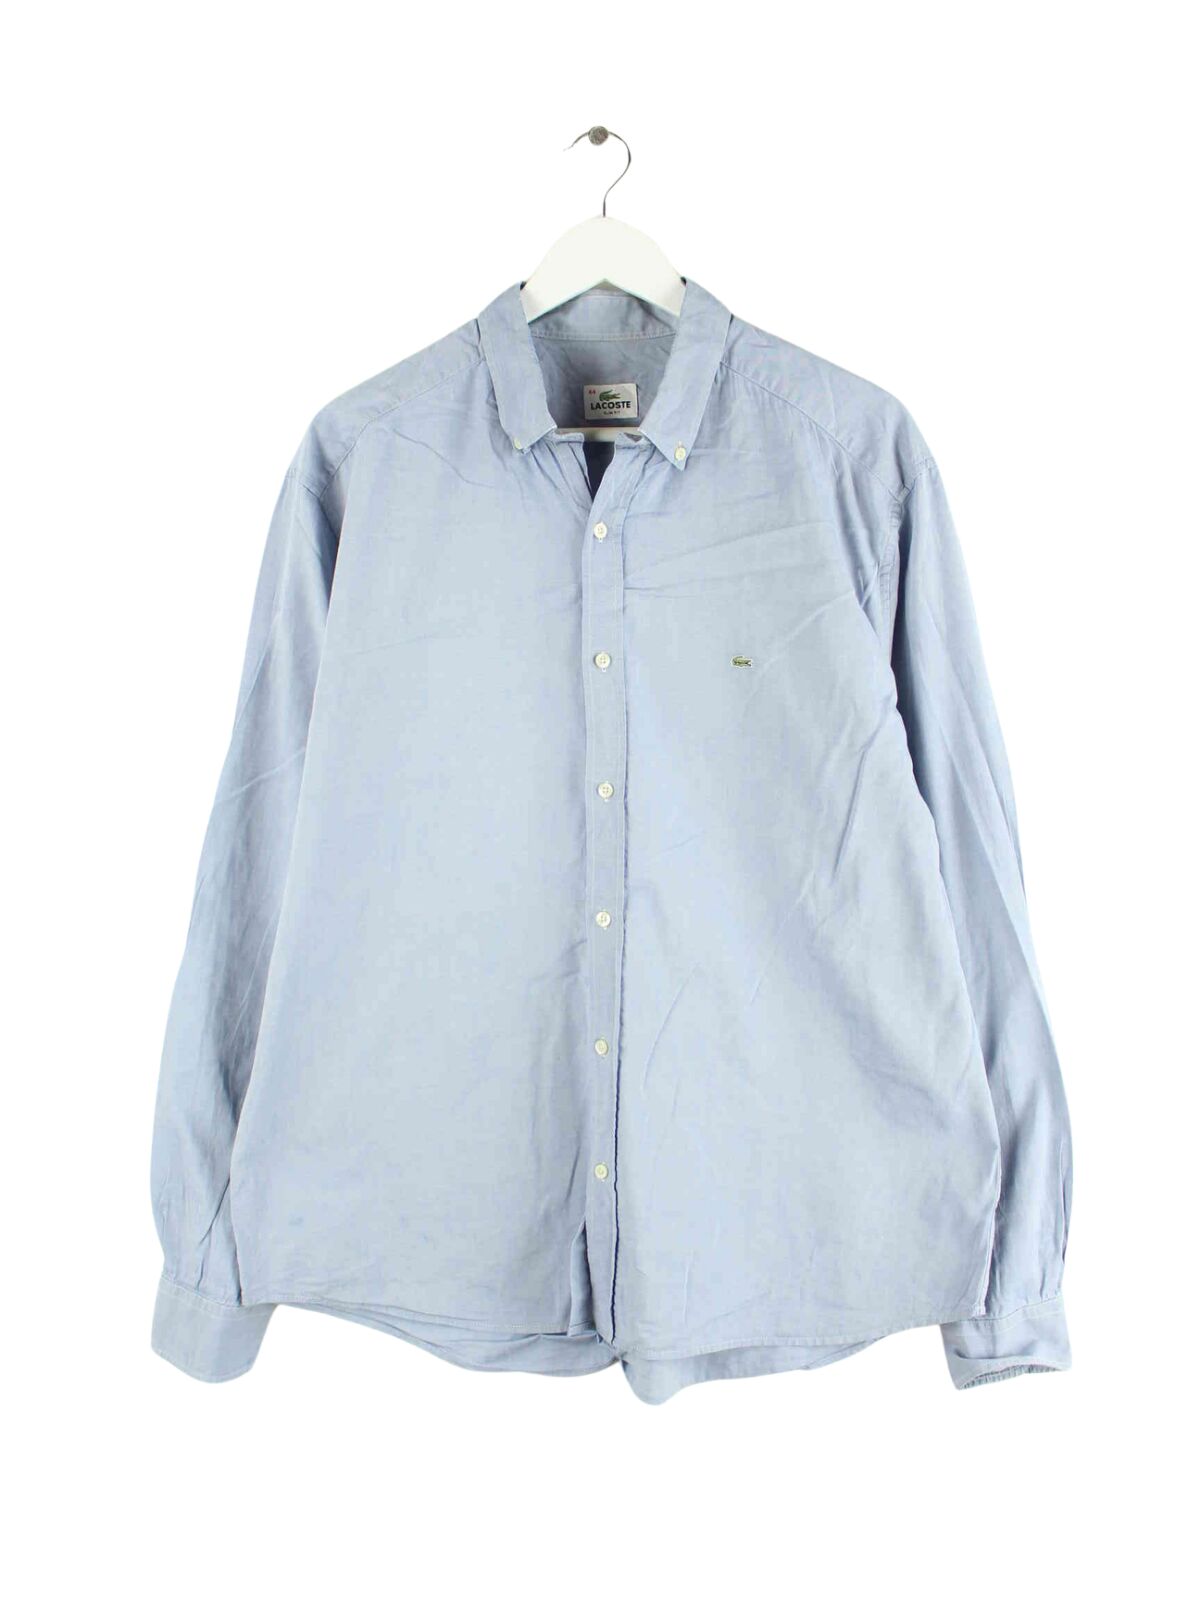 Lacoste Slim Fit Hemd Blau XL (front image)